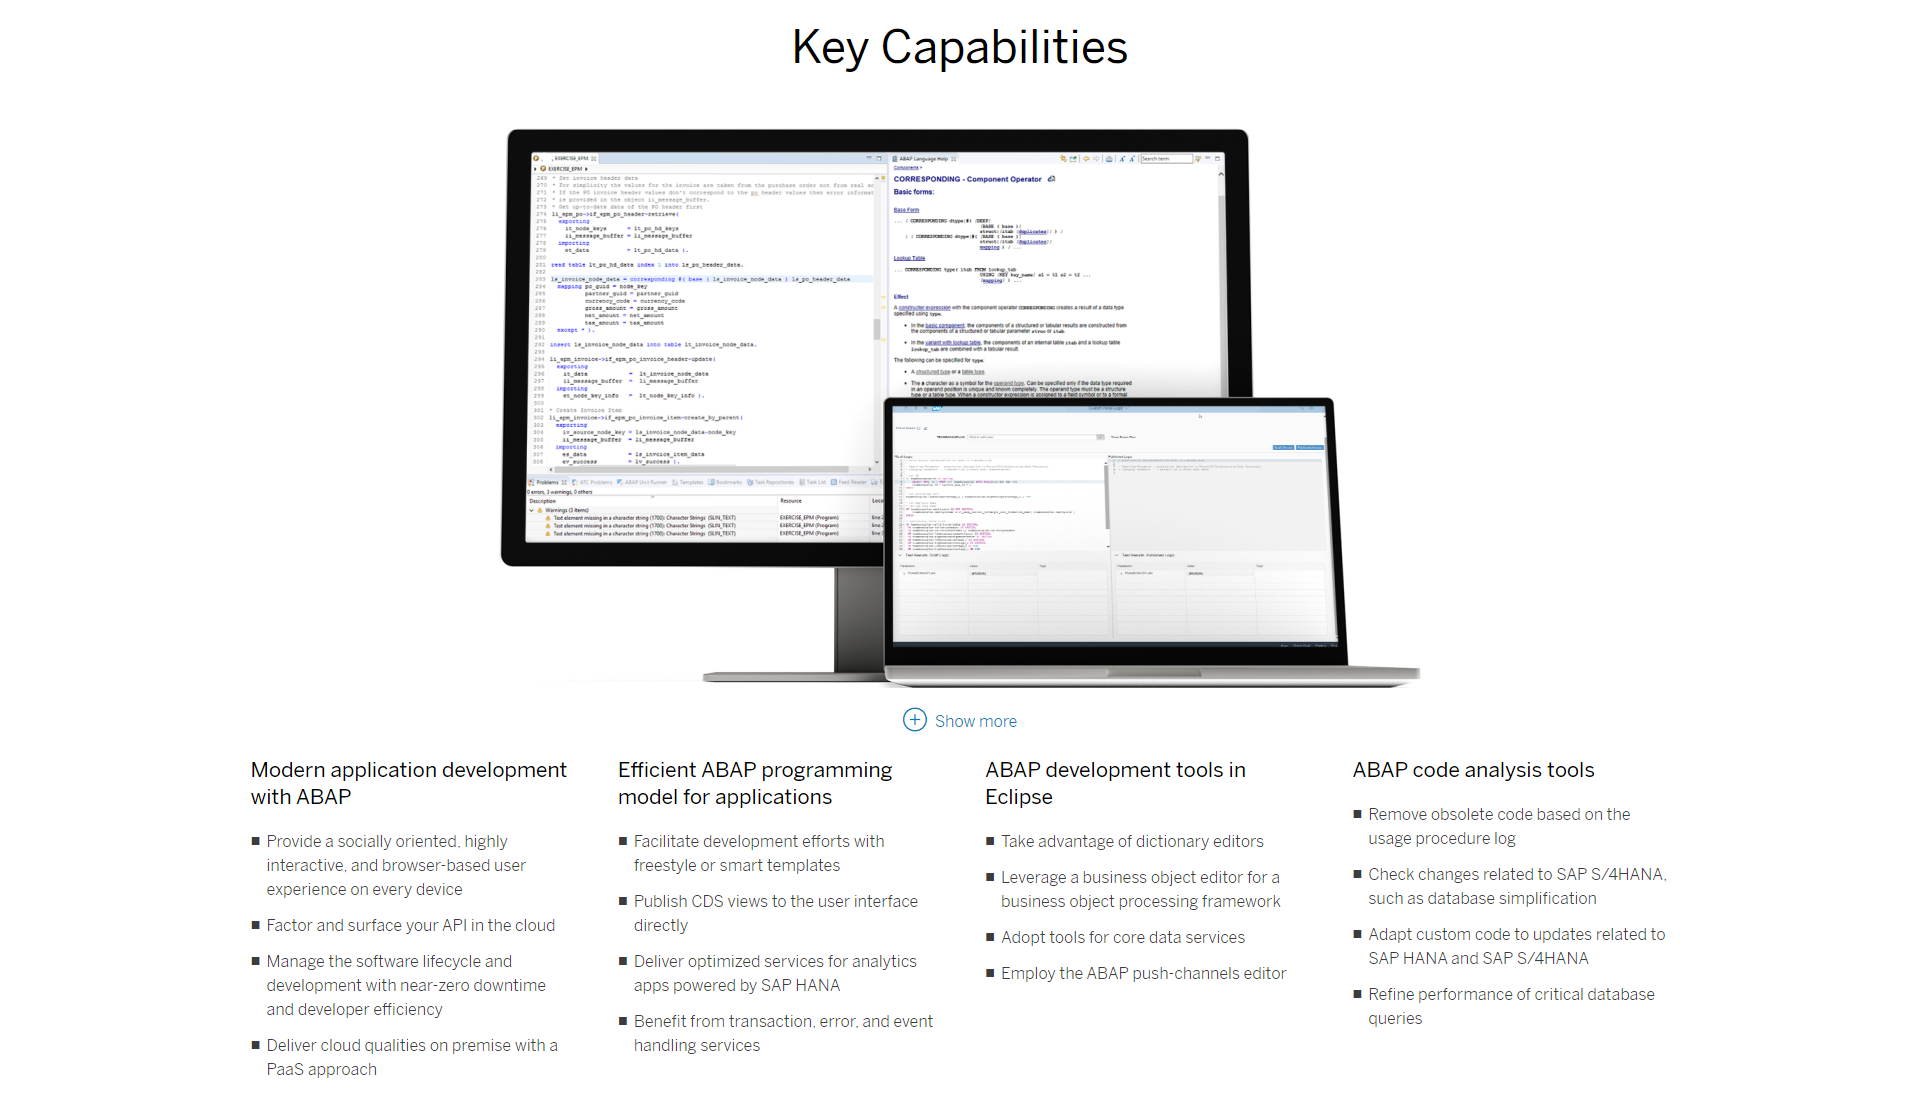 SAP Netweaver Capabilities